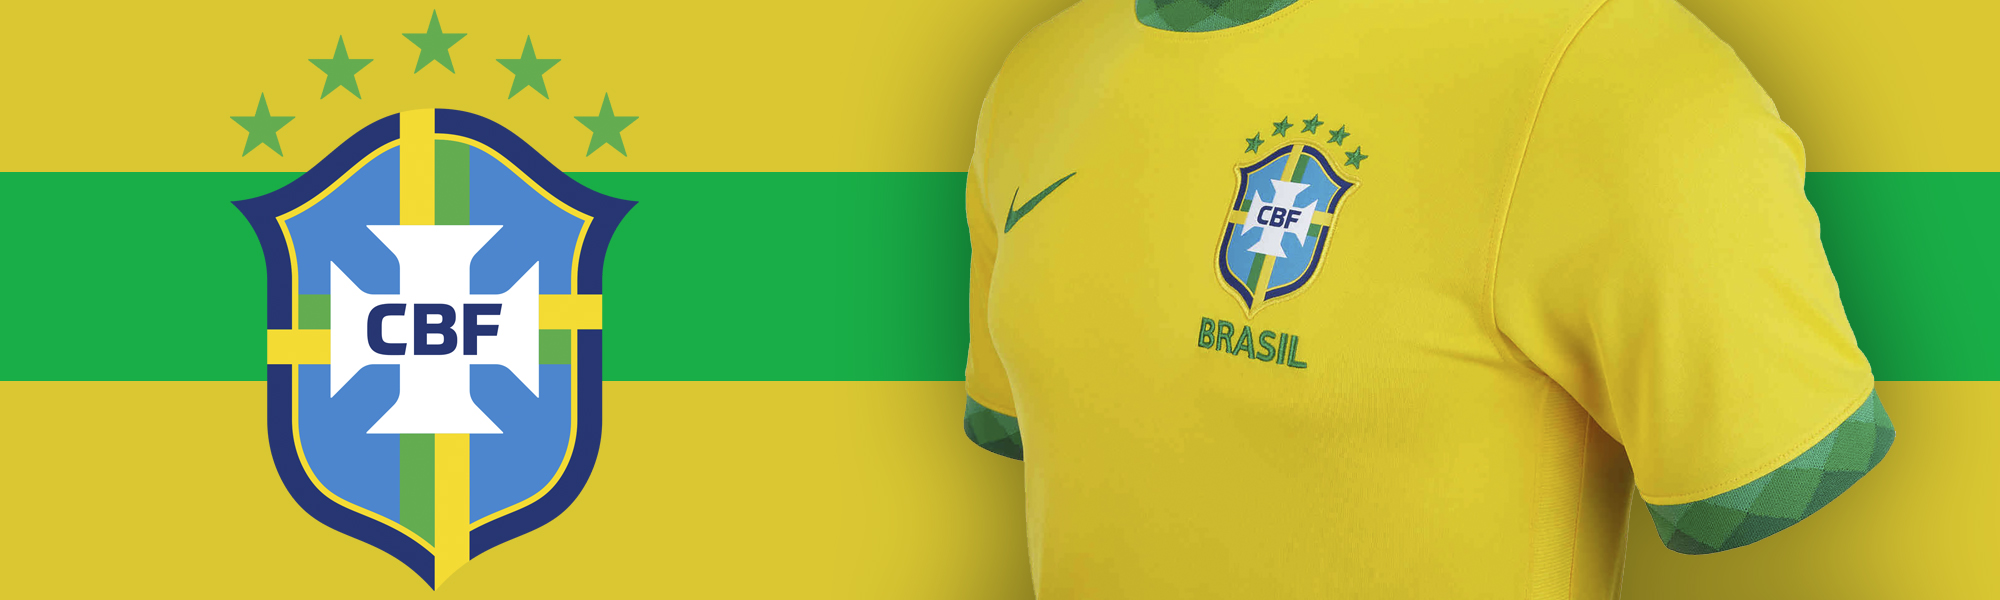 Nike Brazil Academy Pro Men's Full-Zip Knit Soccer Jacket